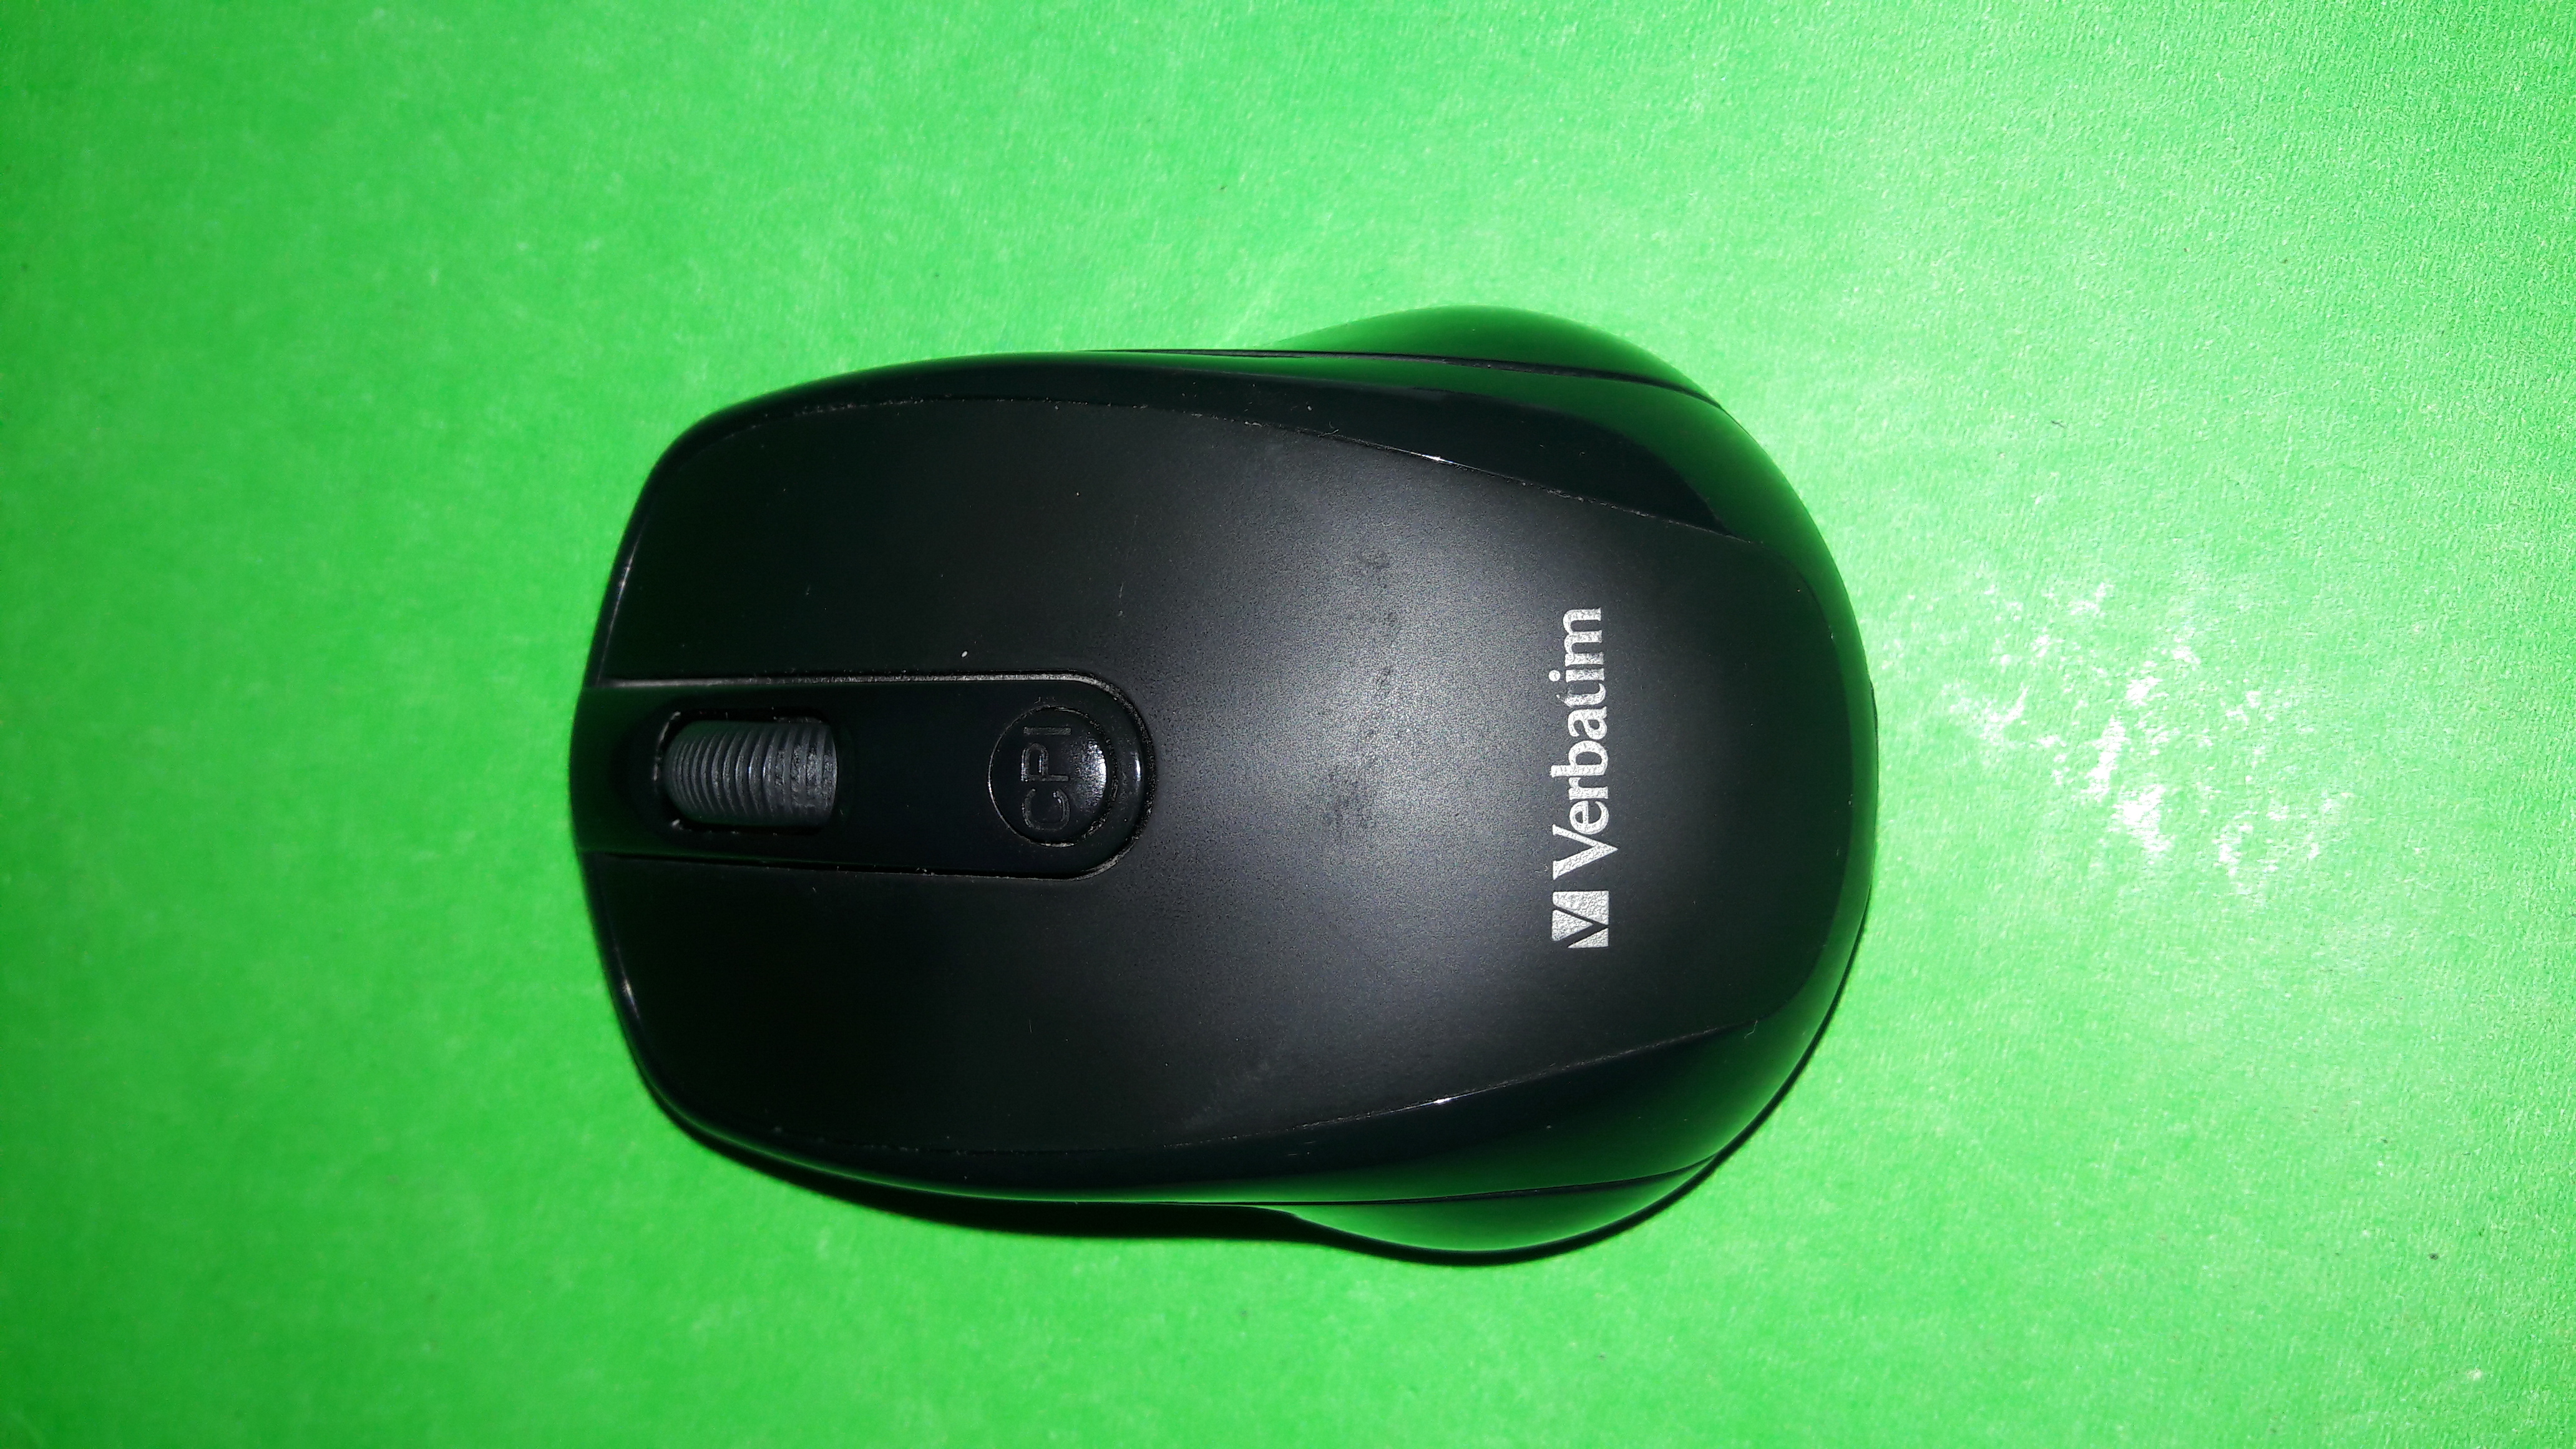 Mouse Verbatim Cover model no. 98122